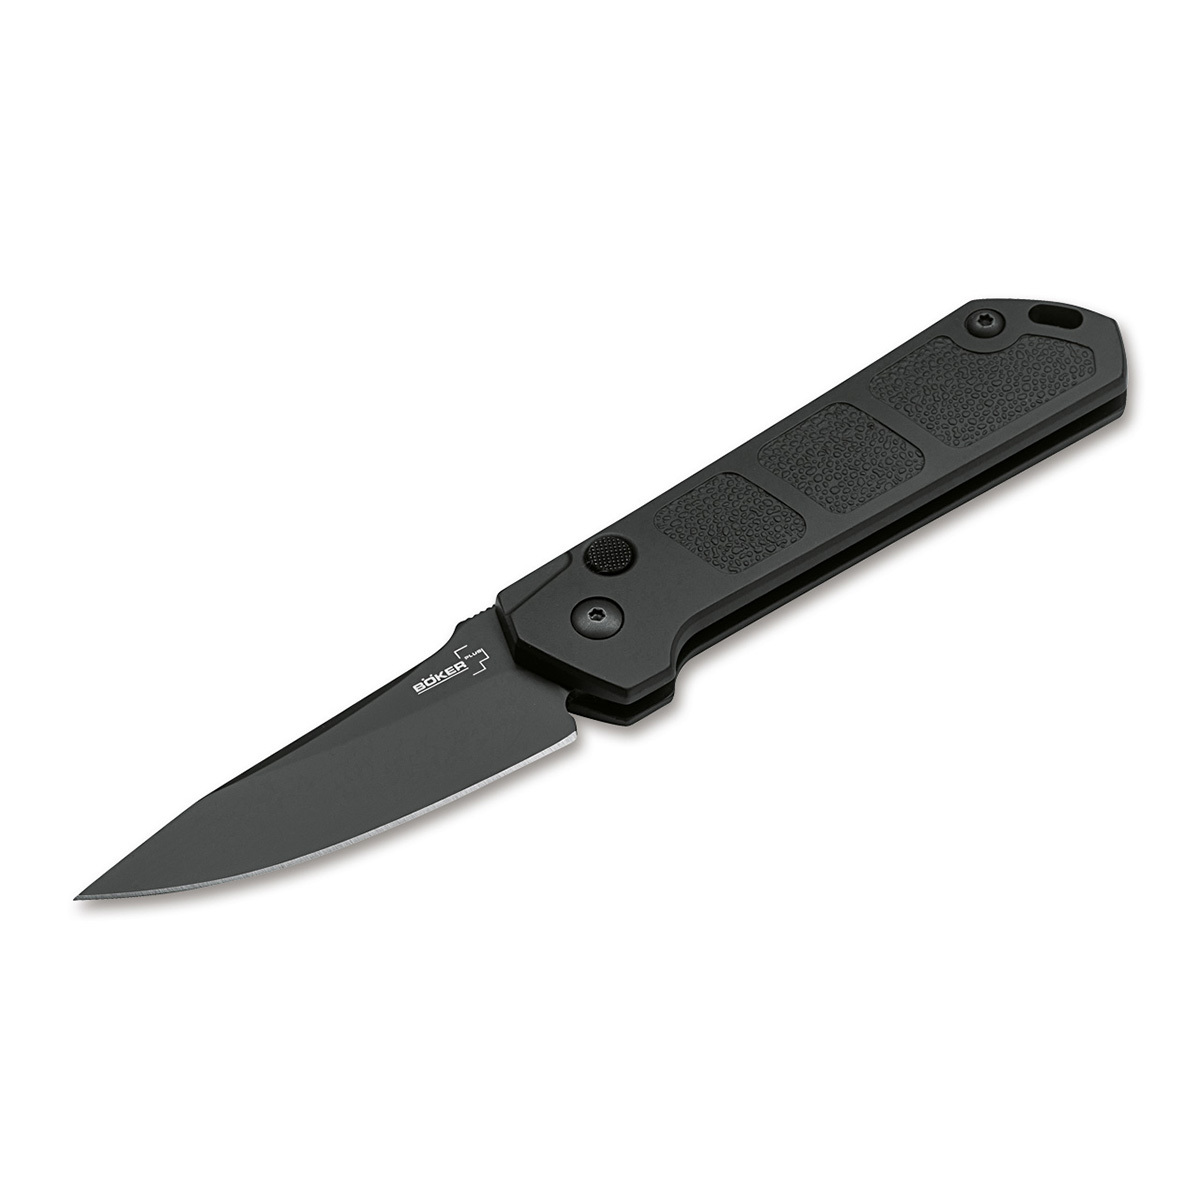 Нож автоматический складной Boker Kihon auto black, сталь AUS8, рукоять алюминий нож складной автоматический ma501 viking nordway